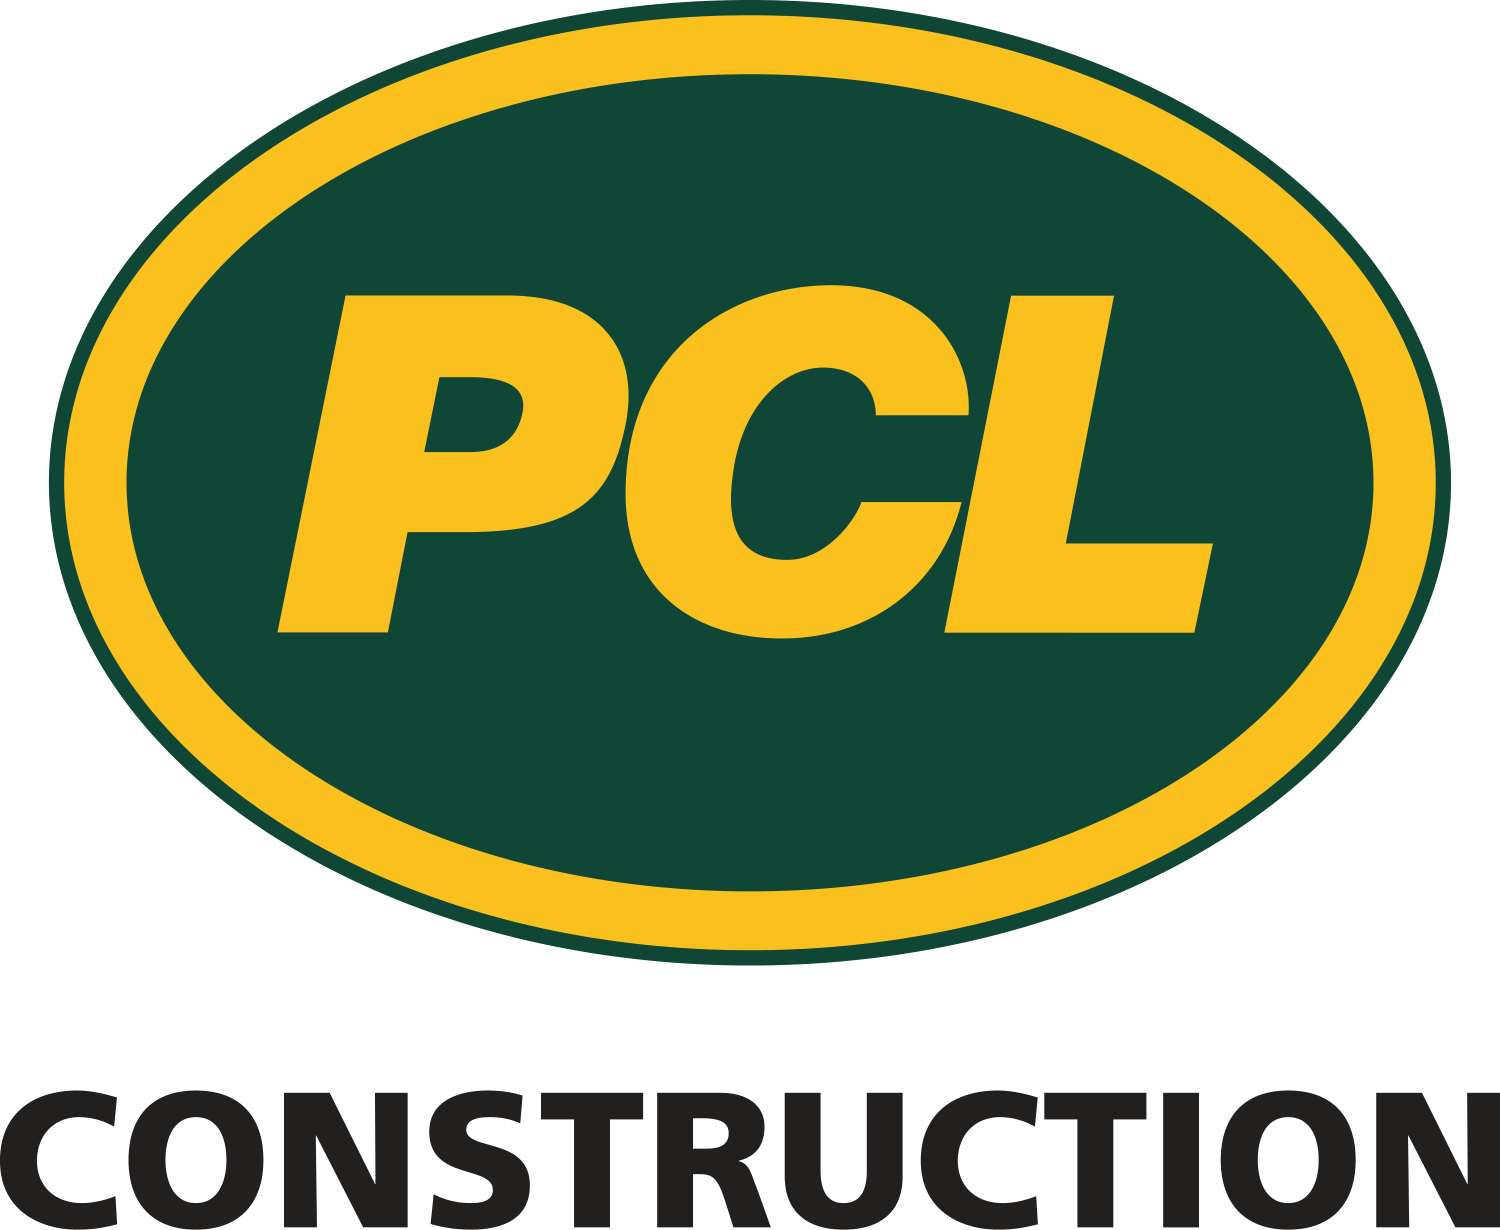 Organization logo of PCL Constructors Canada Inc